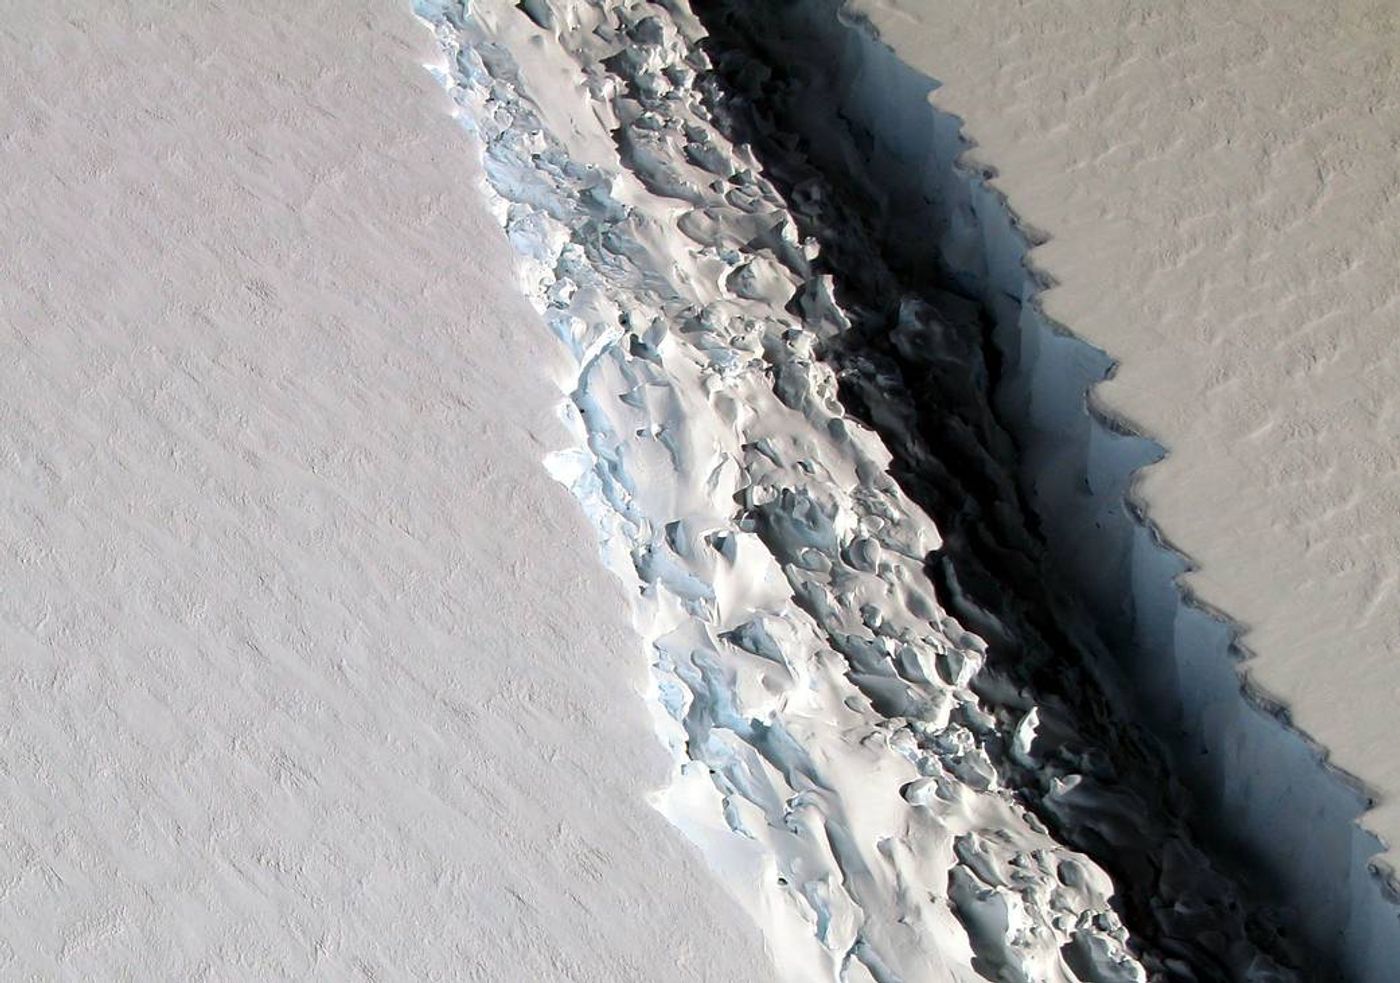 The following rift has been spotted in Antarctica's Larsen C ice shelf.